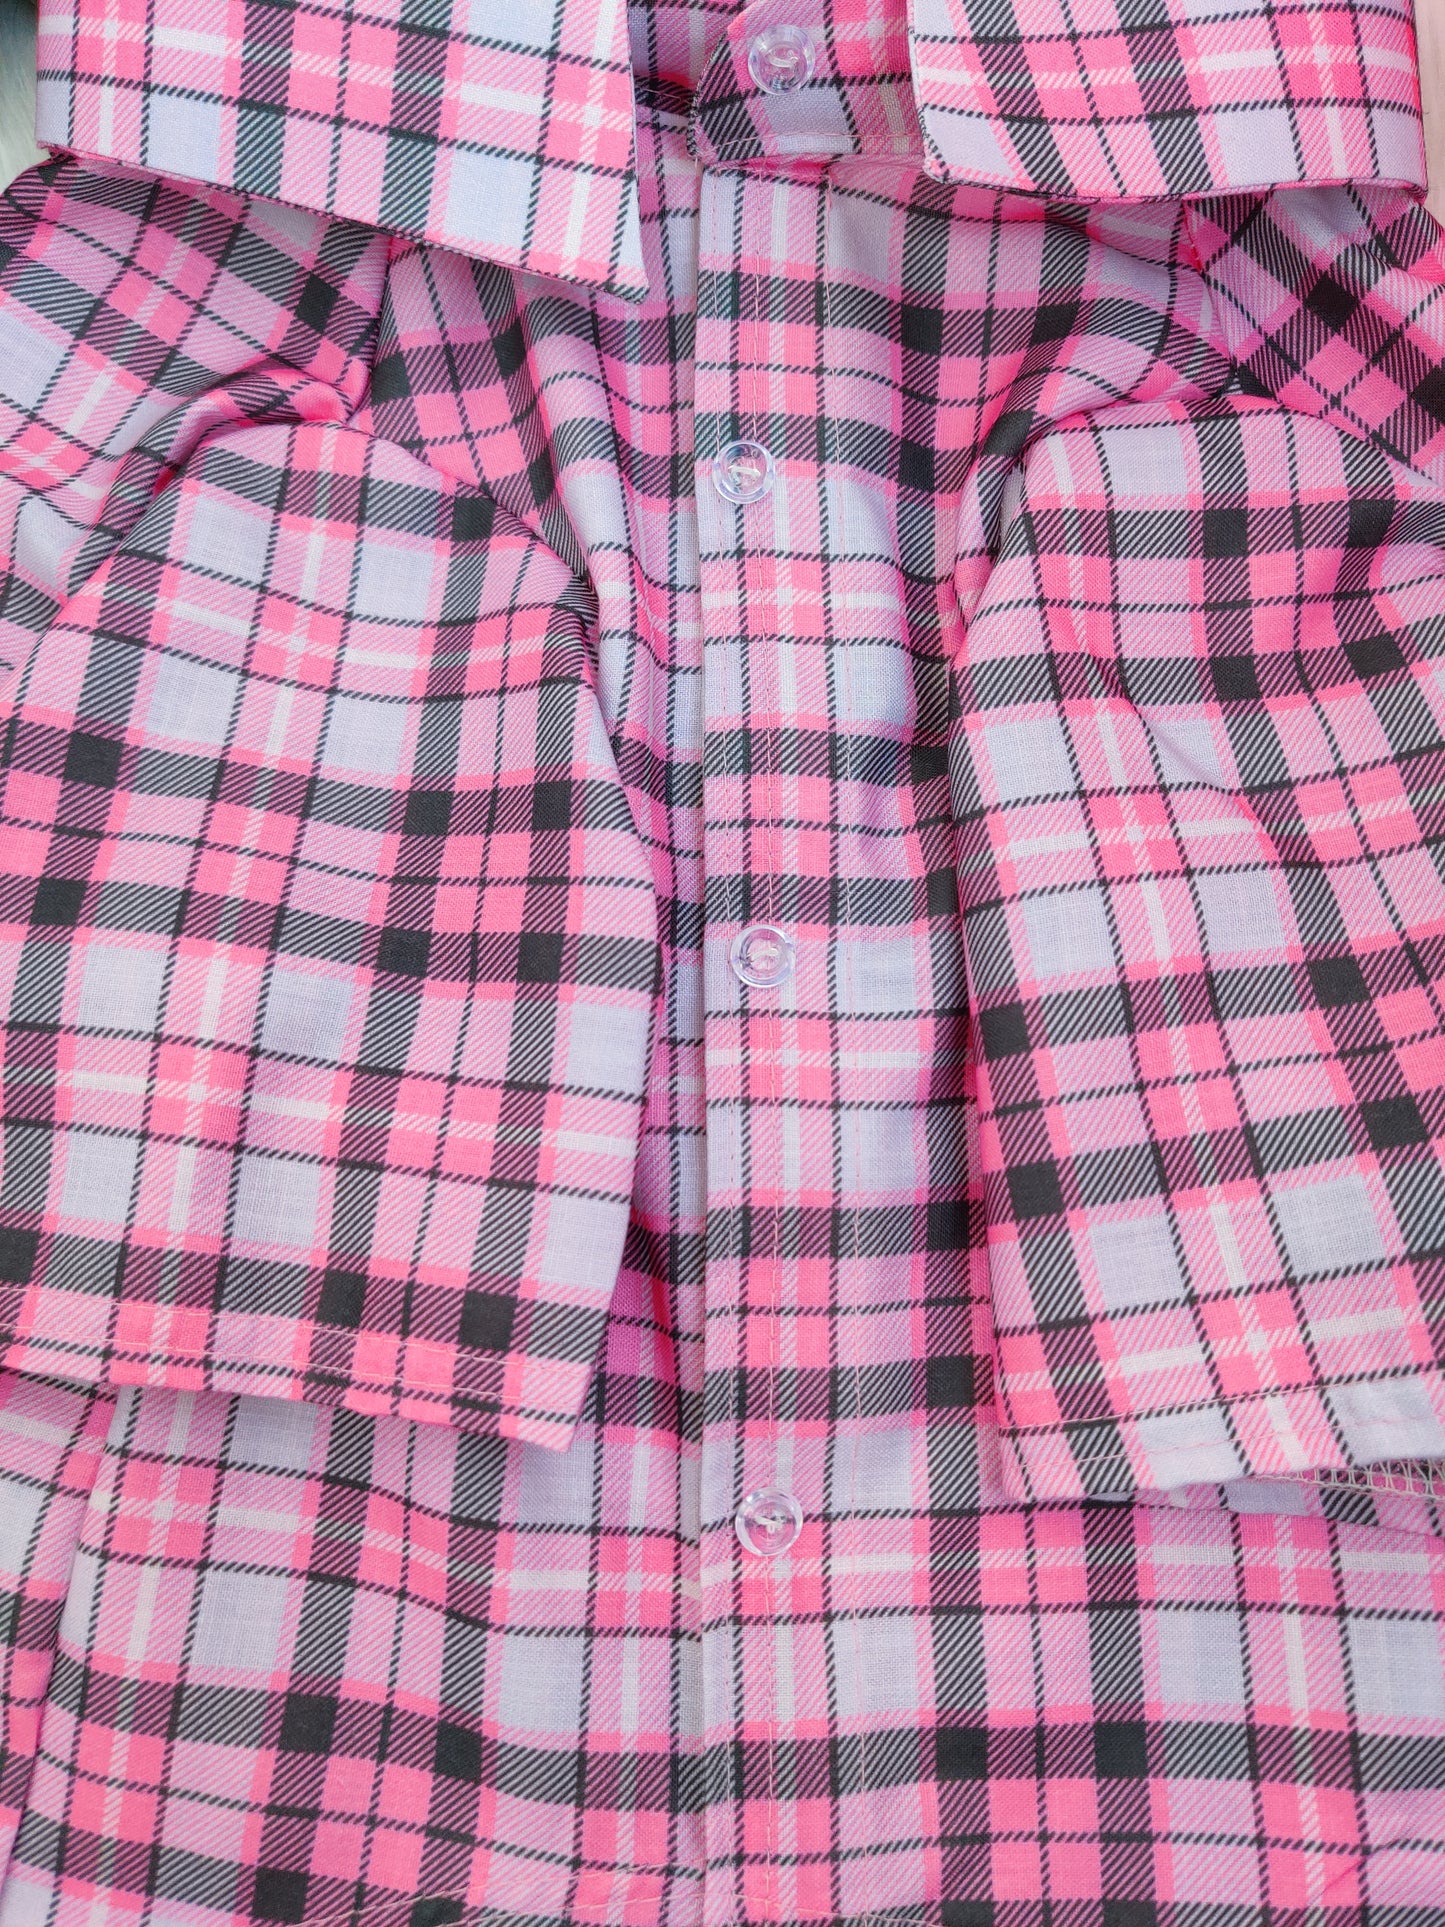 Pink Plaid Shirt